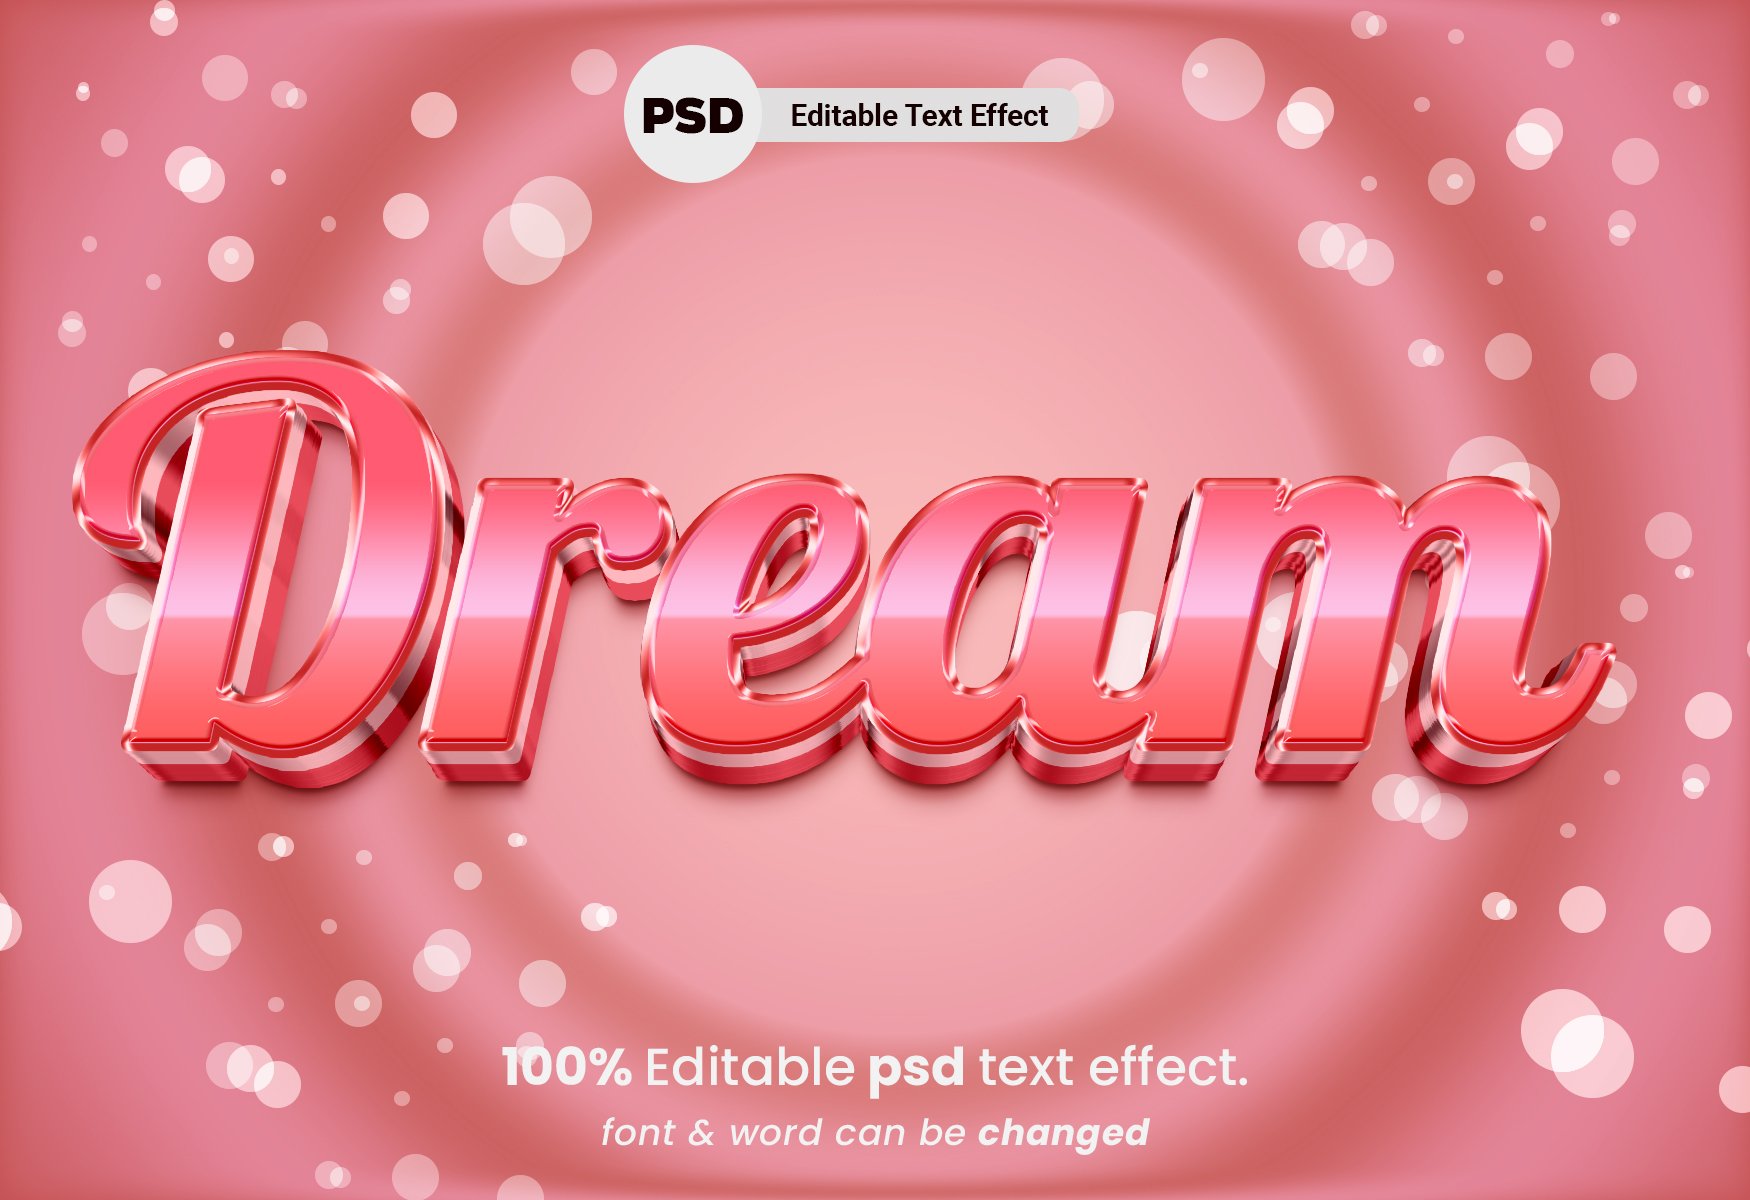 Dream 3D Editable PSD Text Effectcover image.